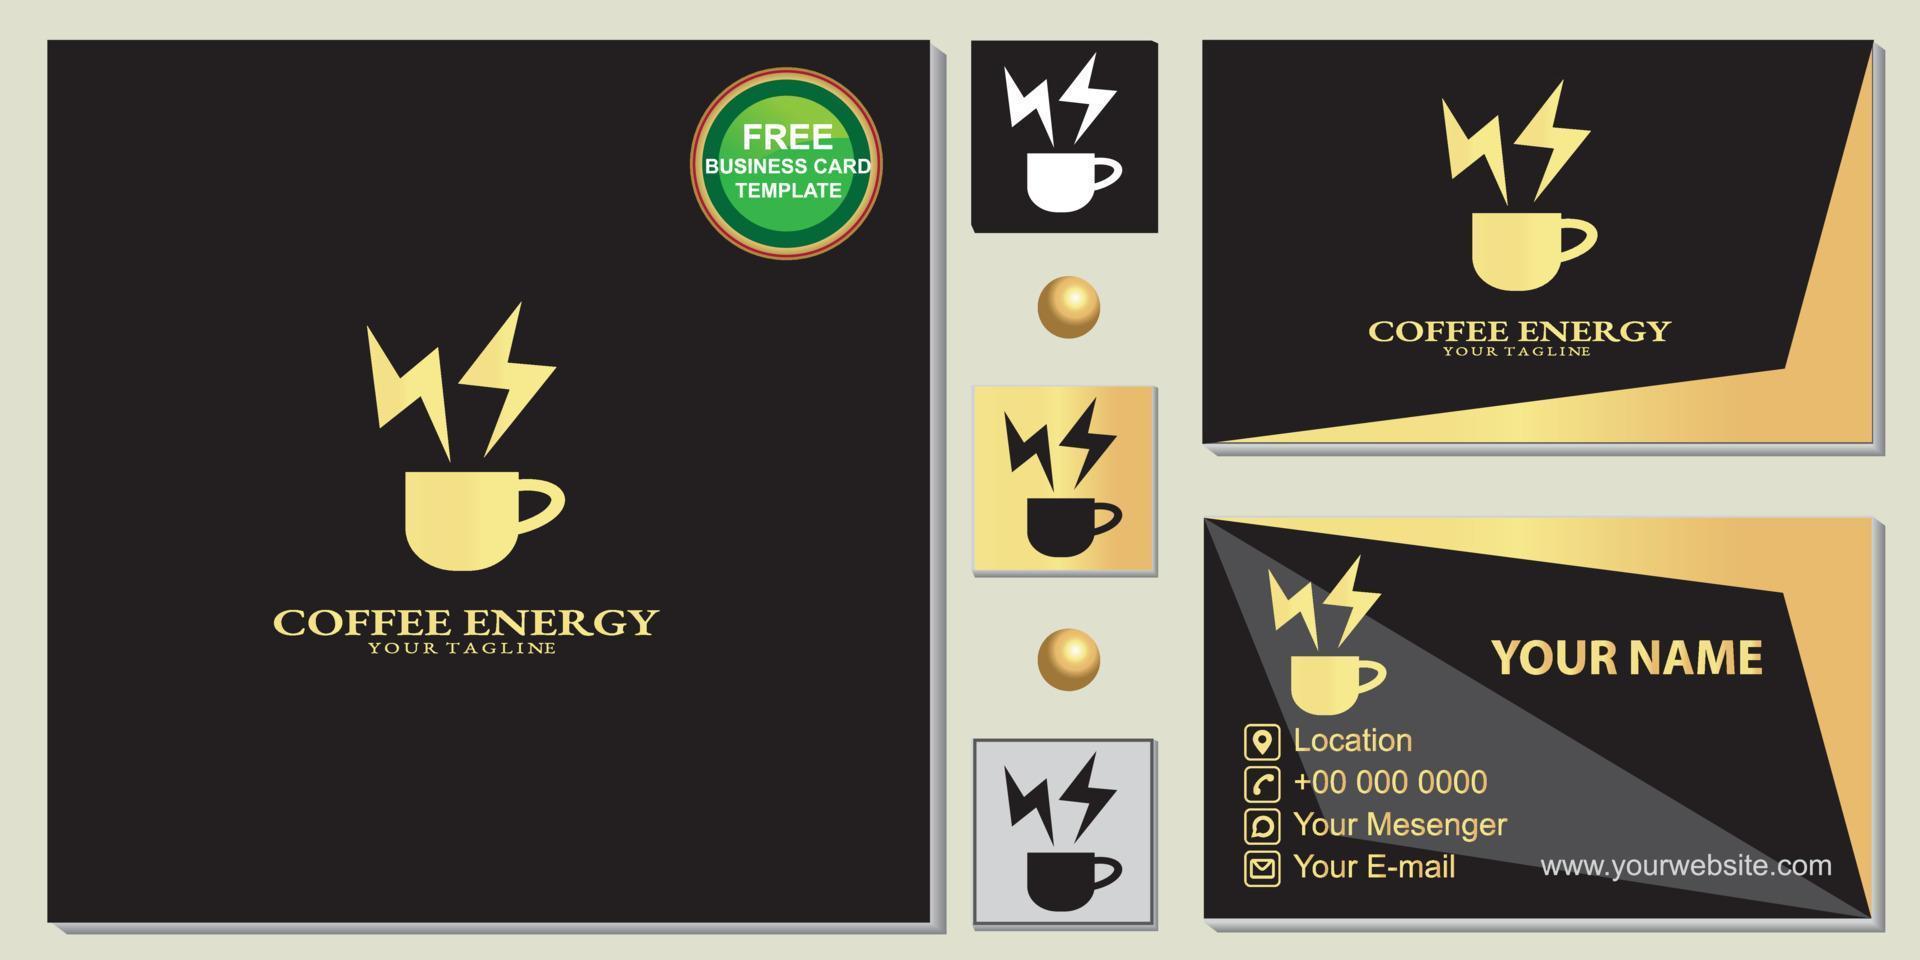 logotipo de café de energia de ouro de luxo, preto simples, modelo de cartão de visita premium gratuito vetor eps 10